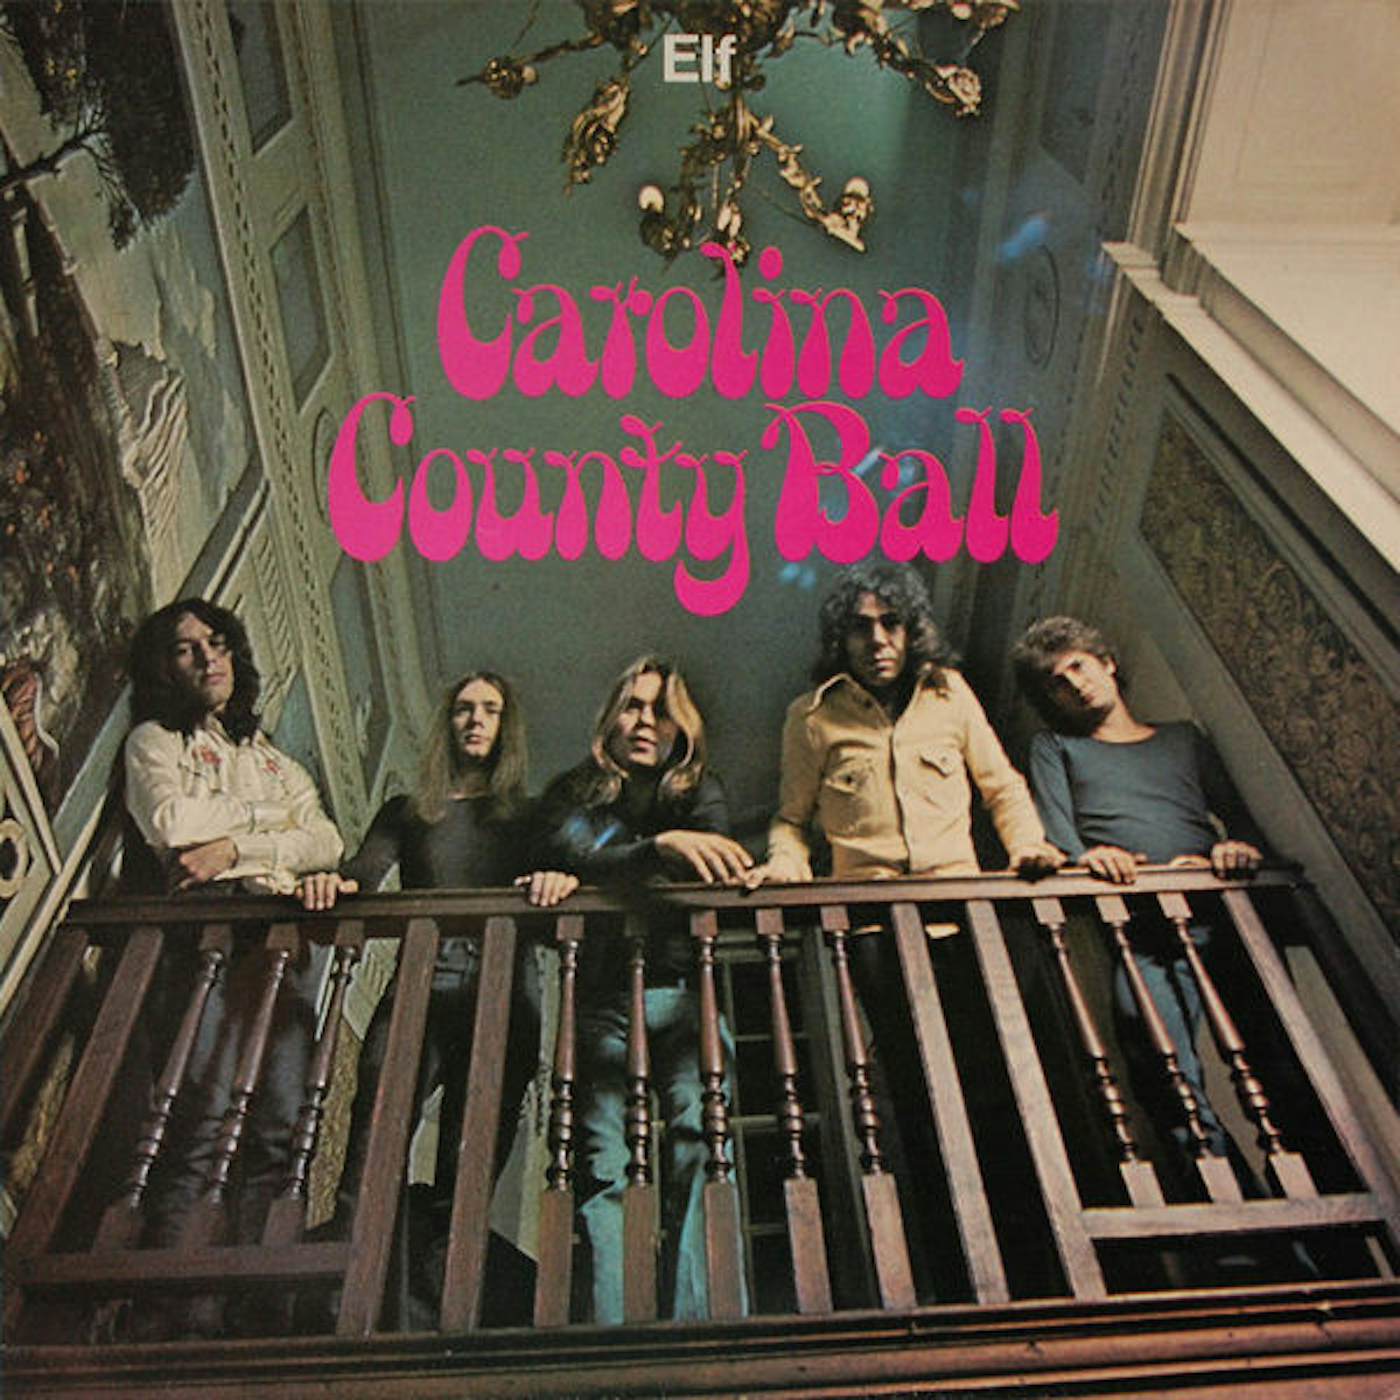 Elf CAROLINA COUNTRY BALL (180G) Vinyl Record